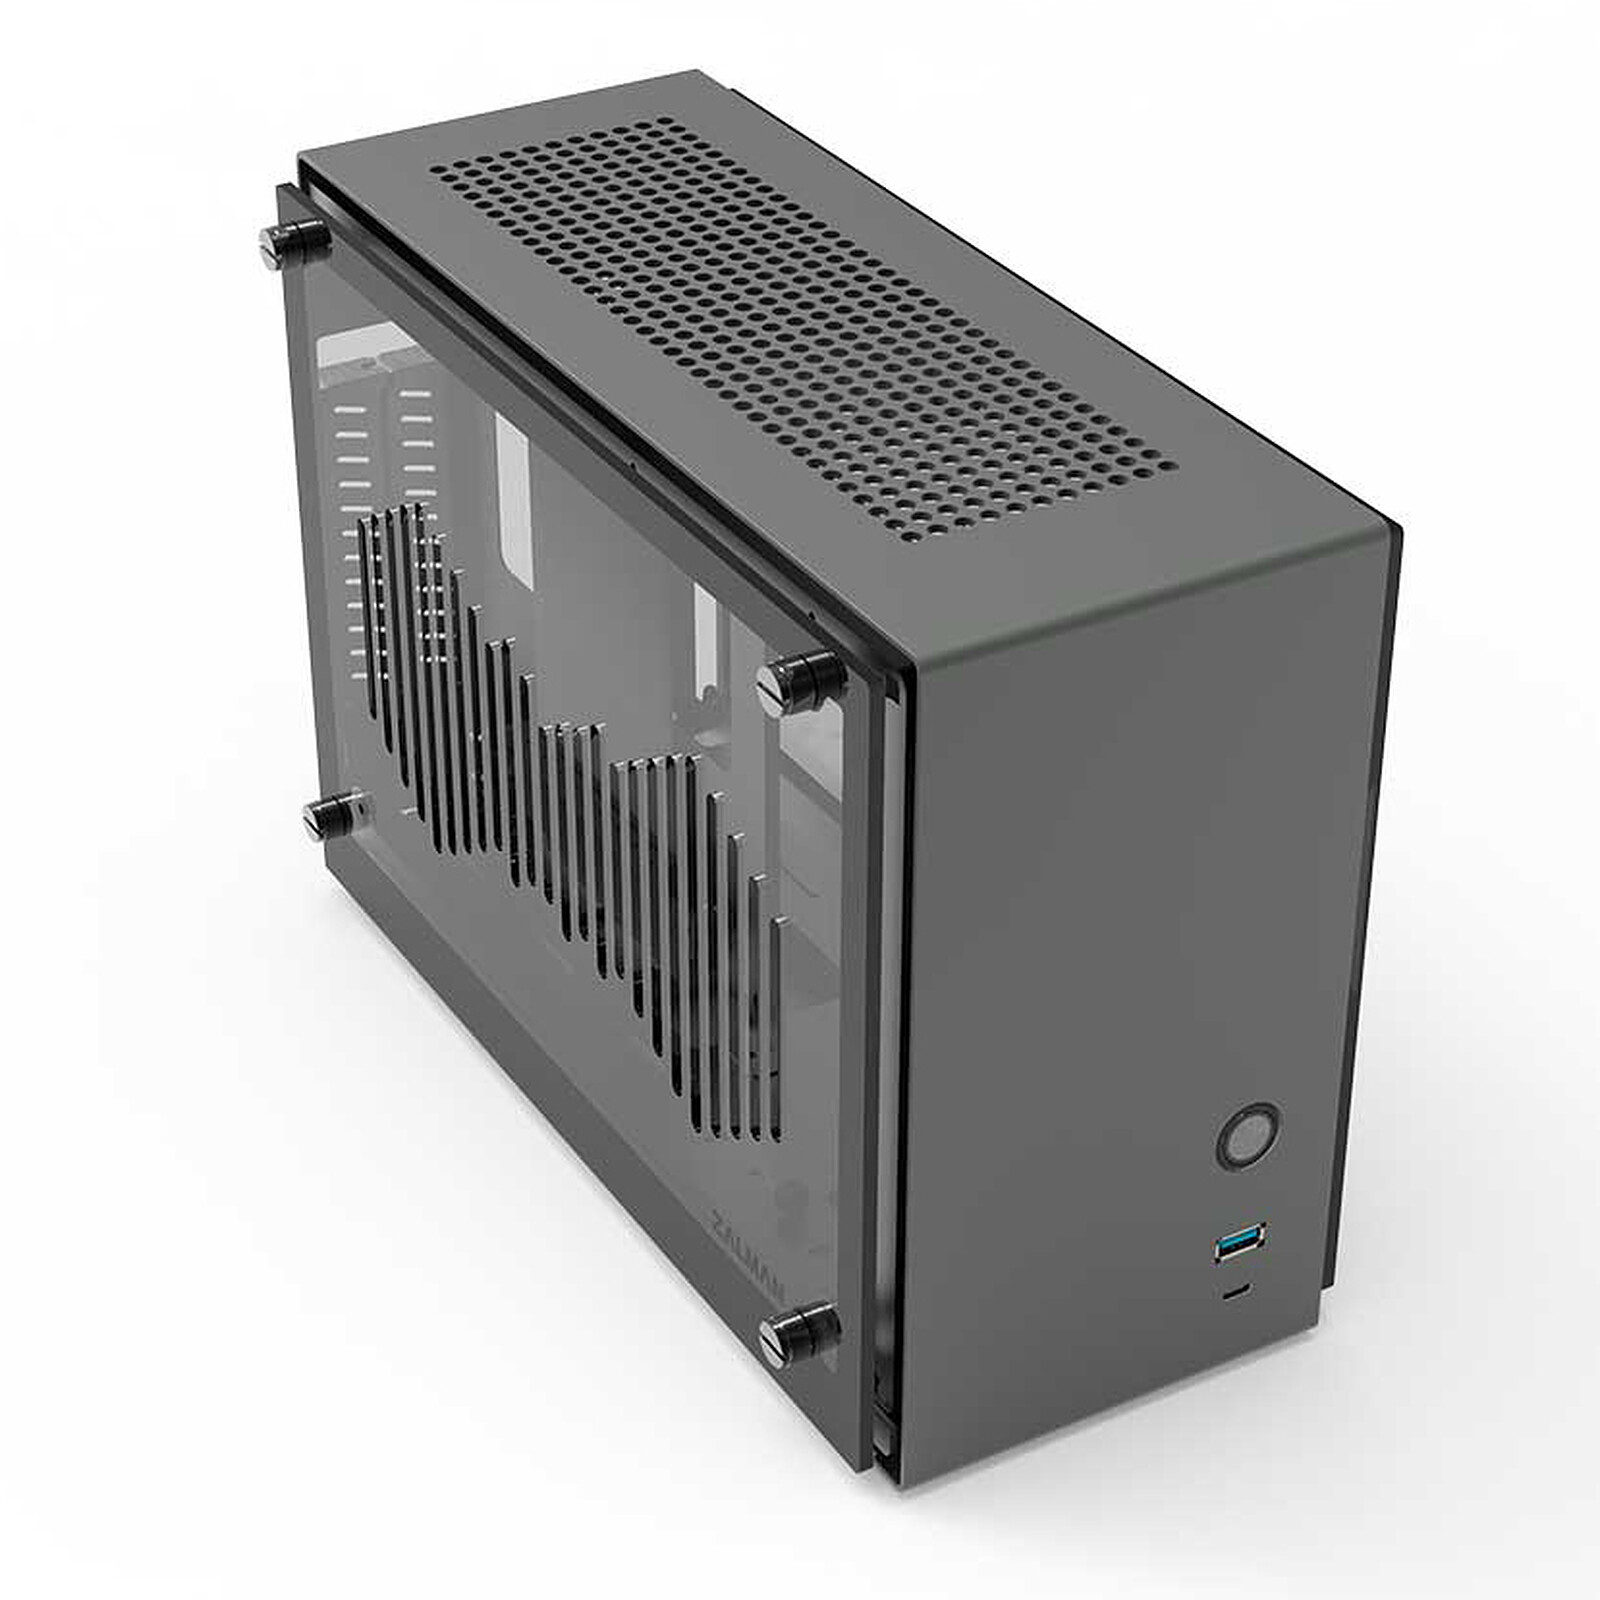 Boitier Mini ITX pour PC Gamer : achat / vente Mini ITX sur